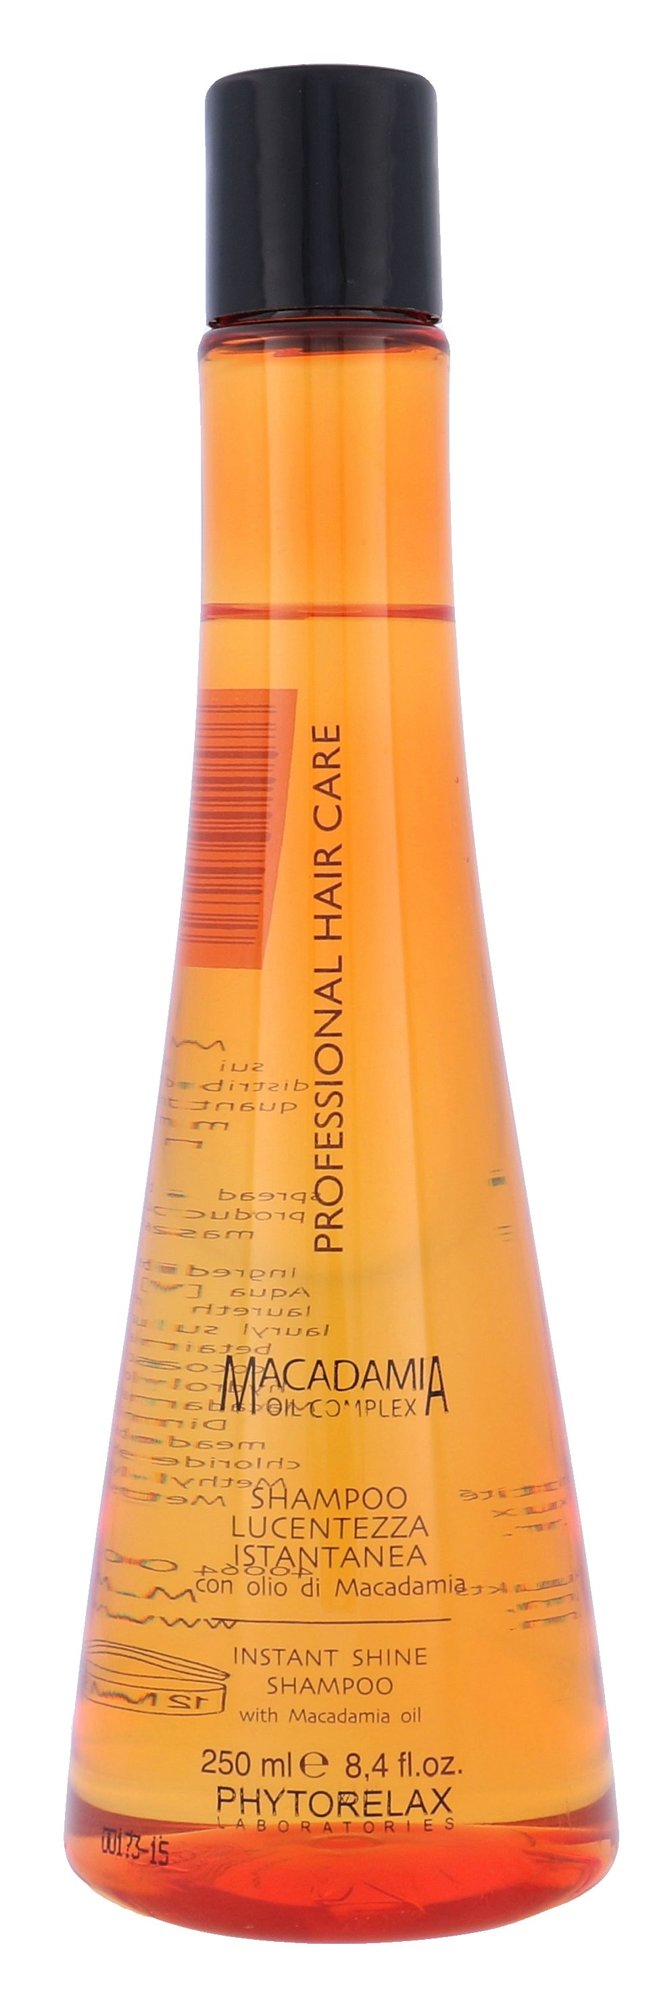 Phytorelax Laboratories Macadamia Instant Shine Shampoo